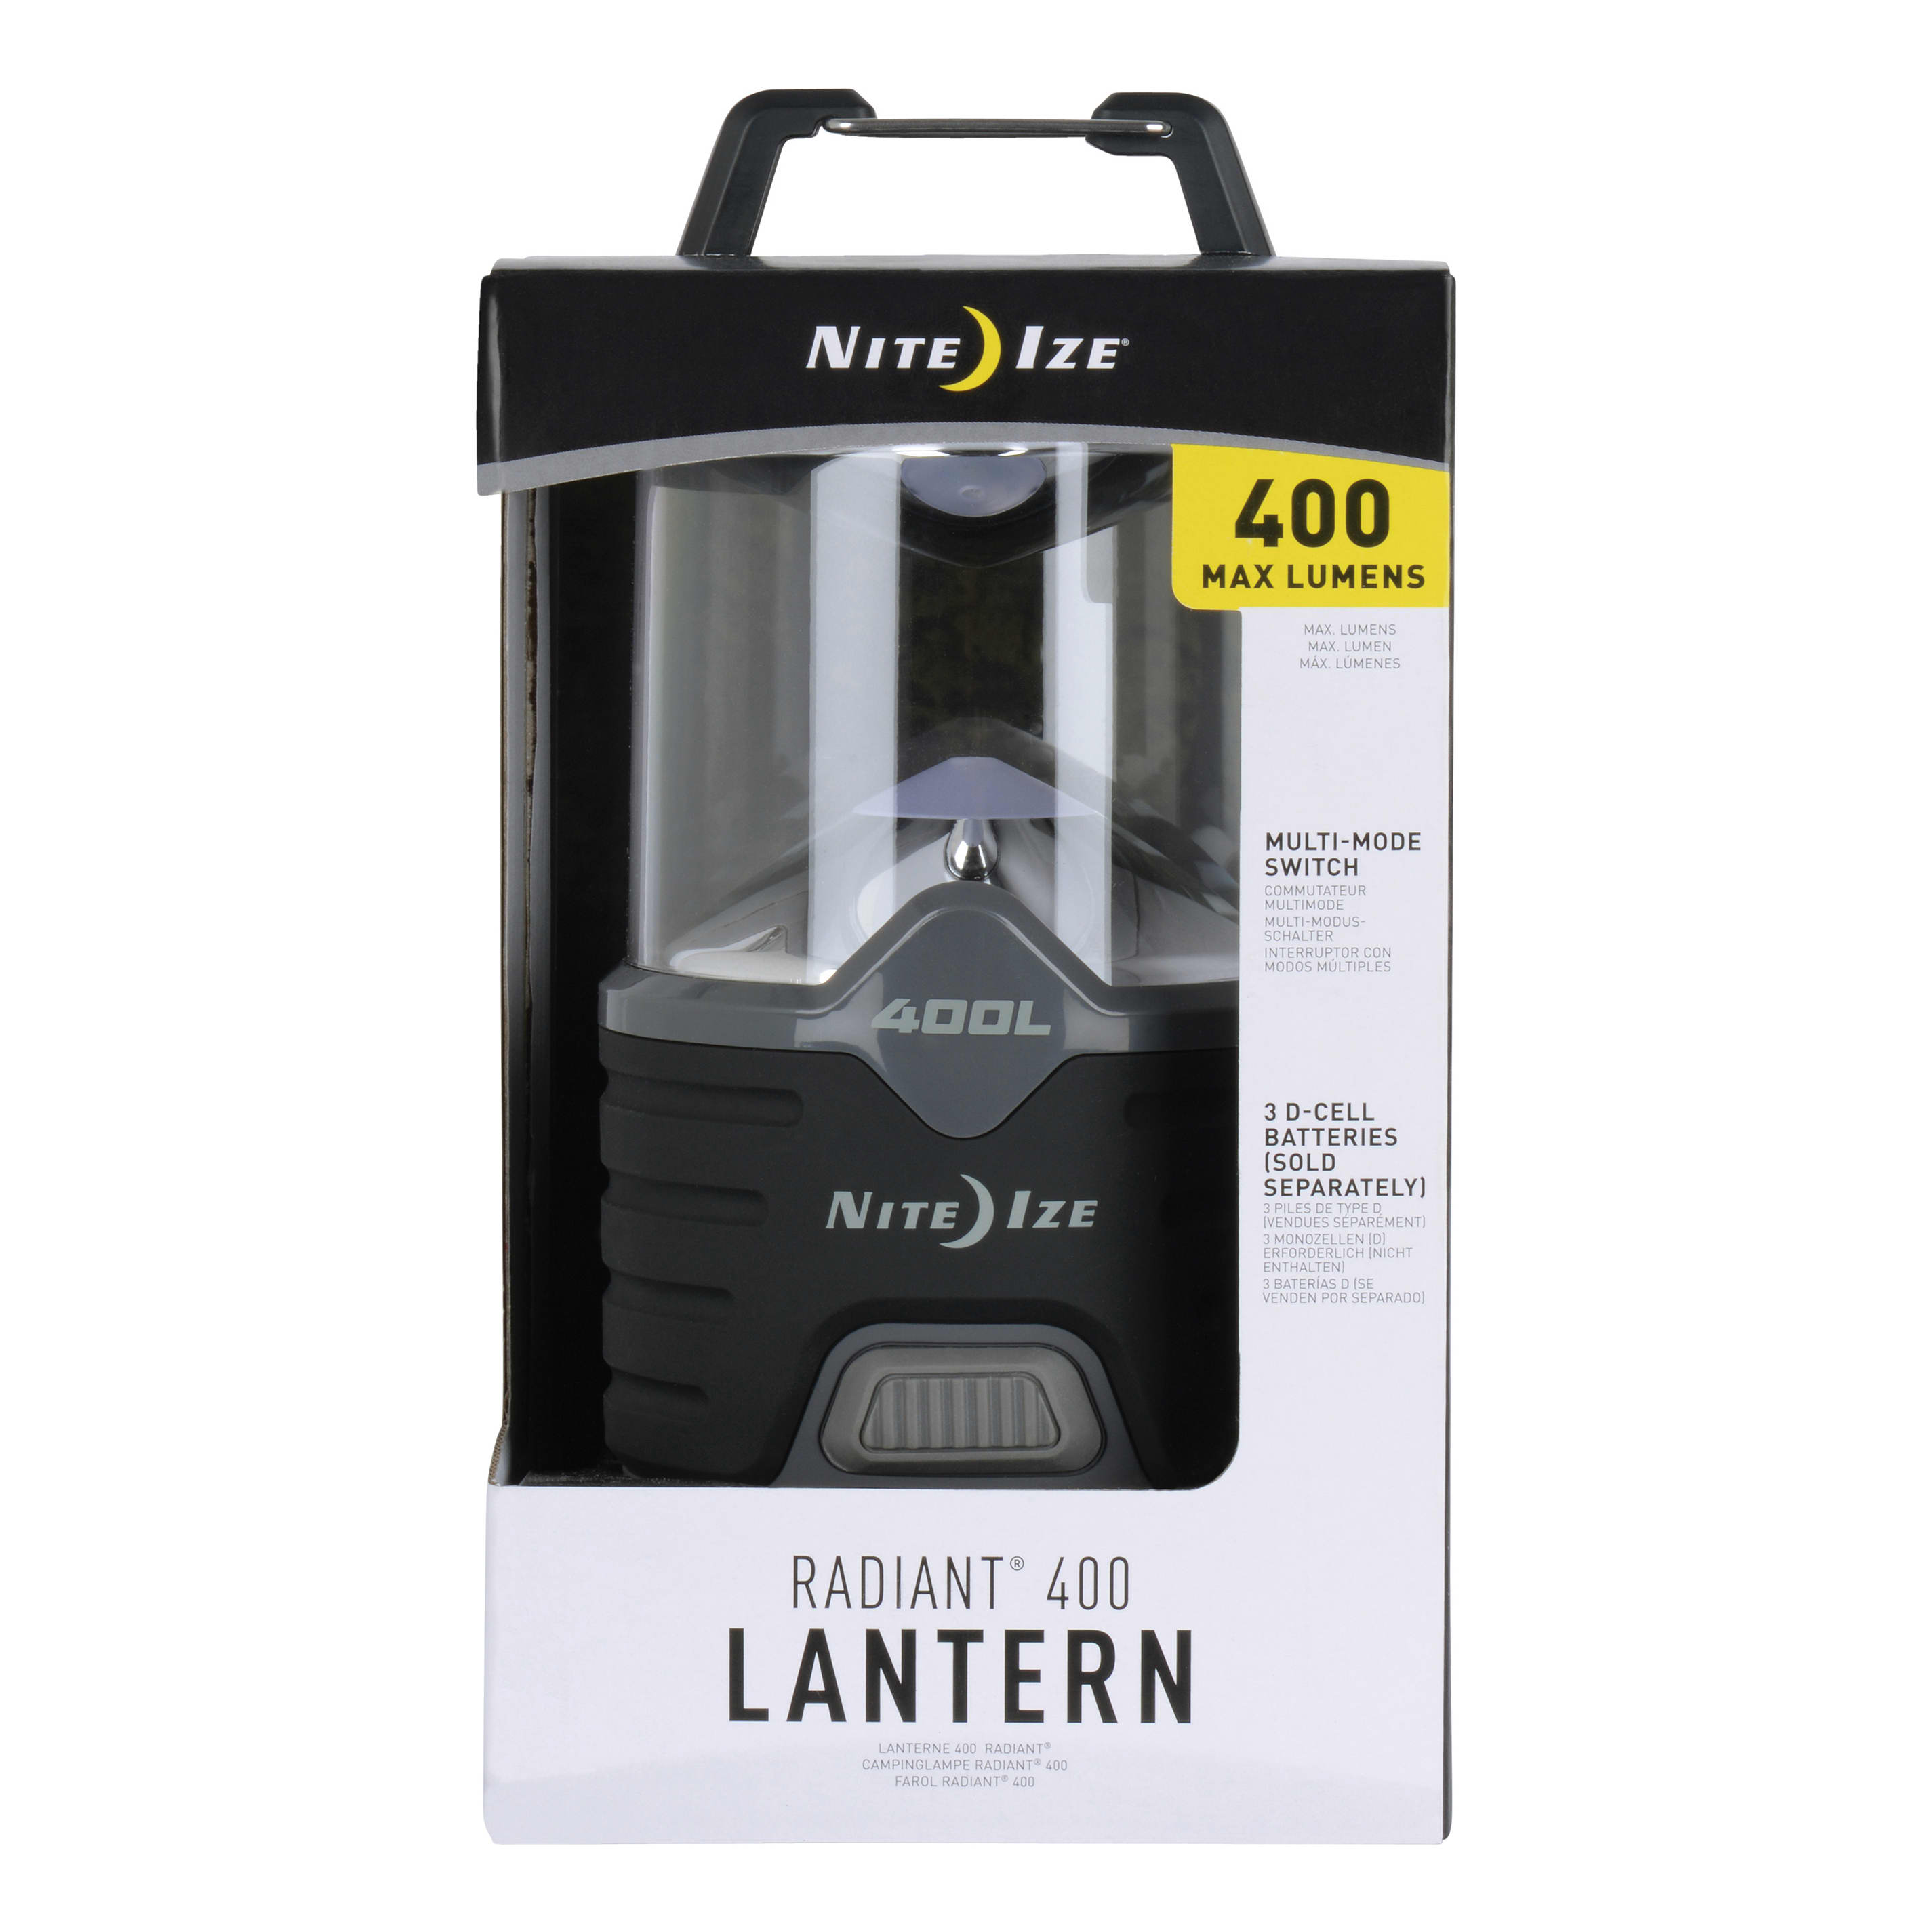 Nite Ize® Radiant® 400 Lantern